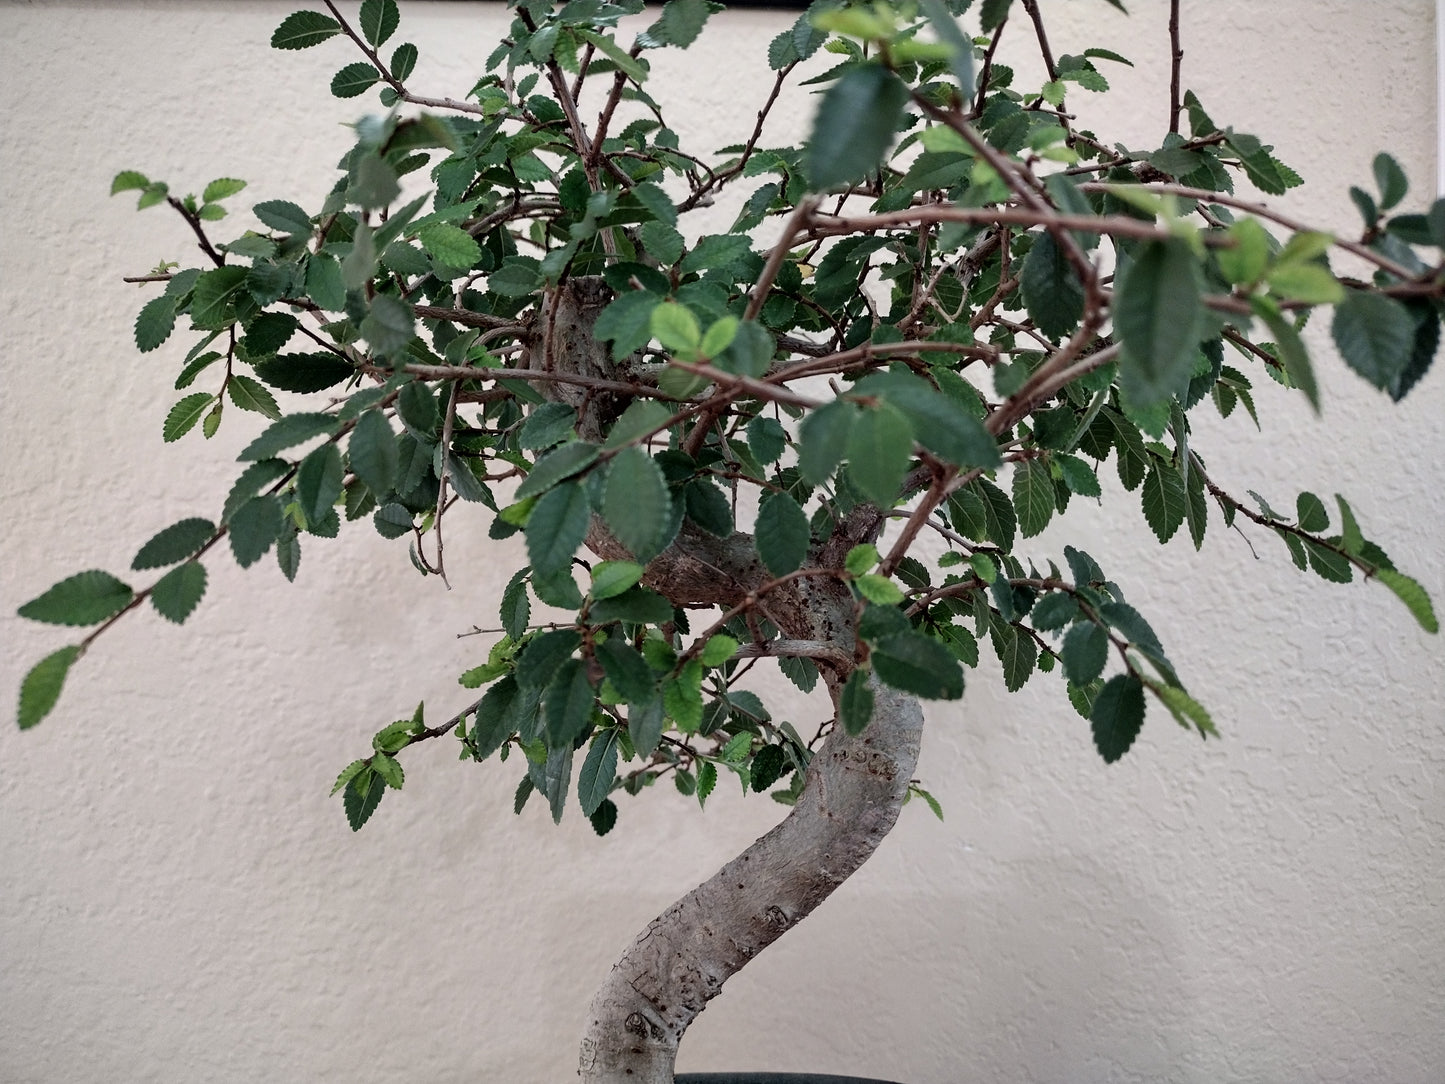 Chinese Elm Bonsai Tree